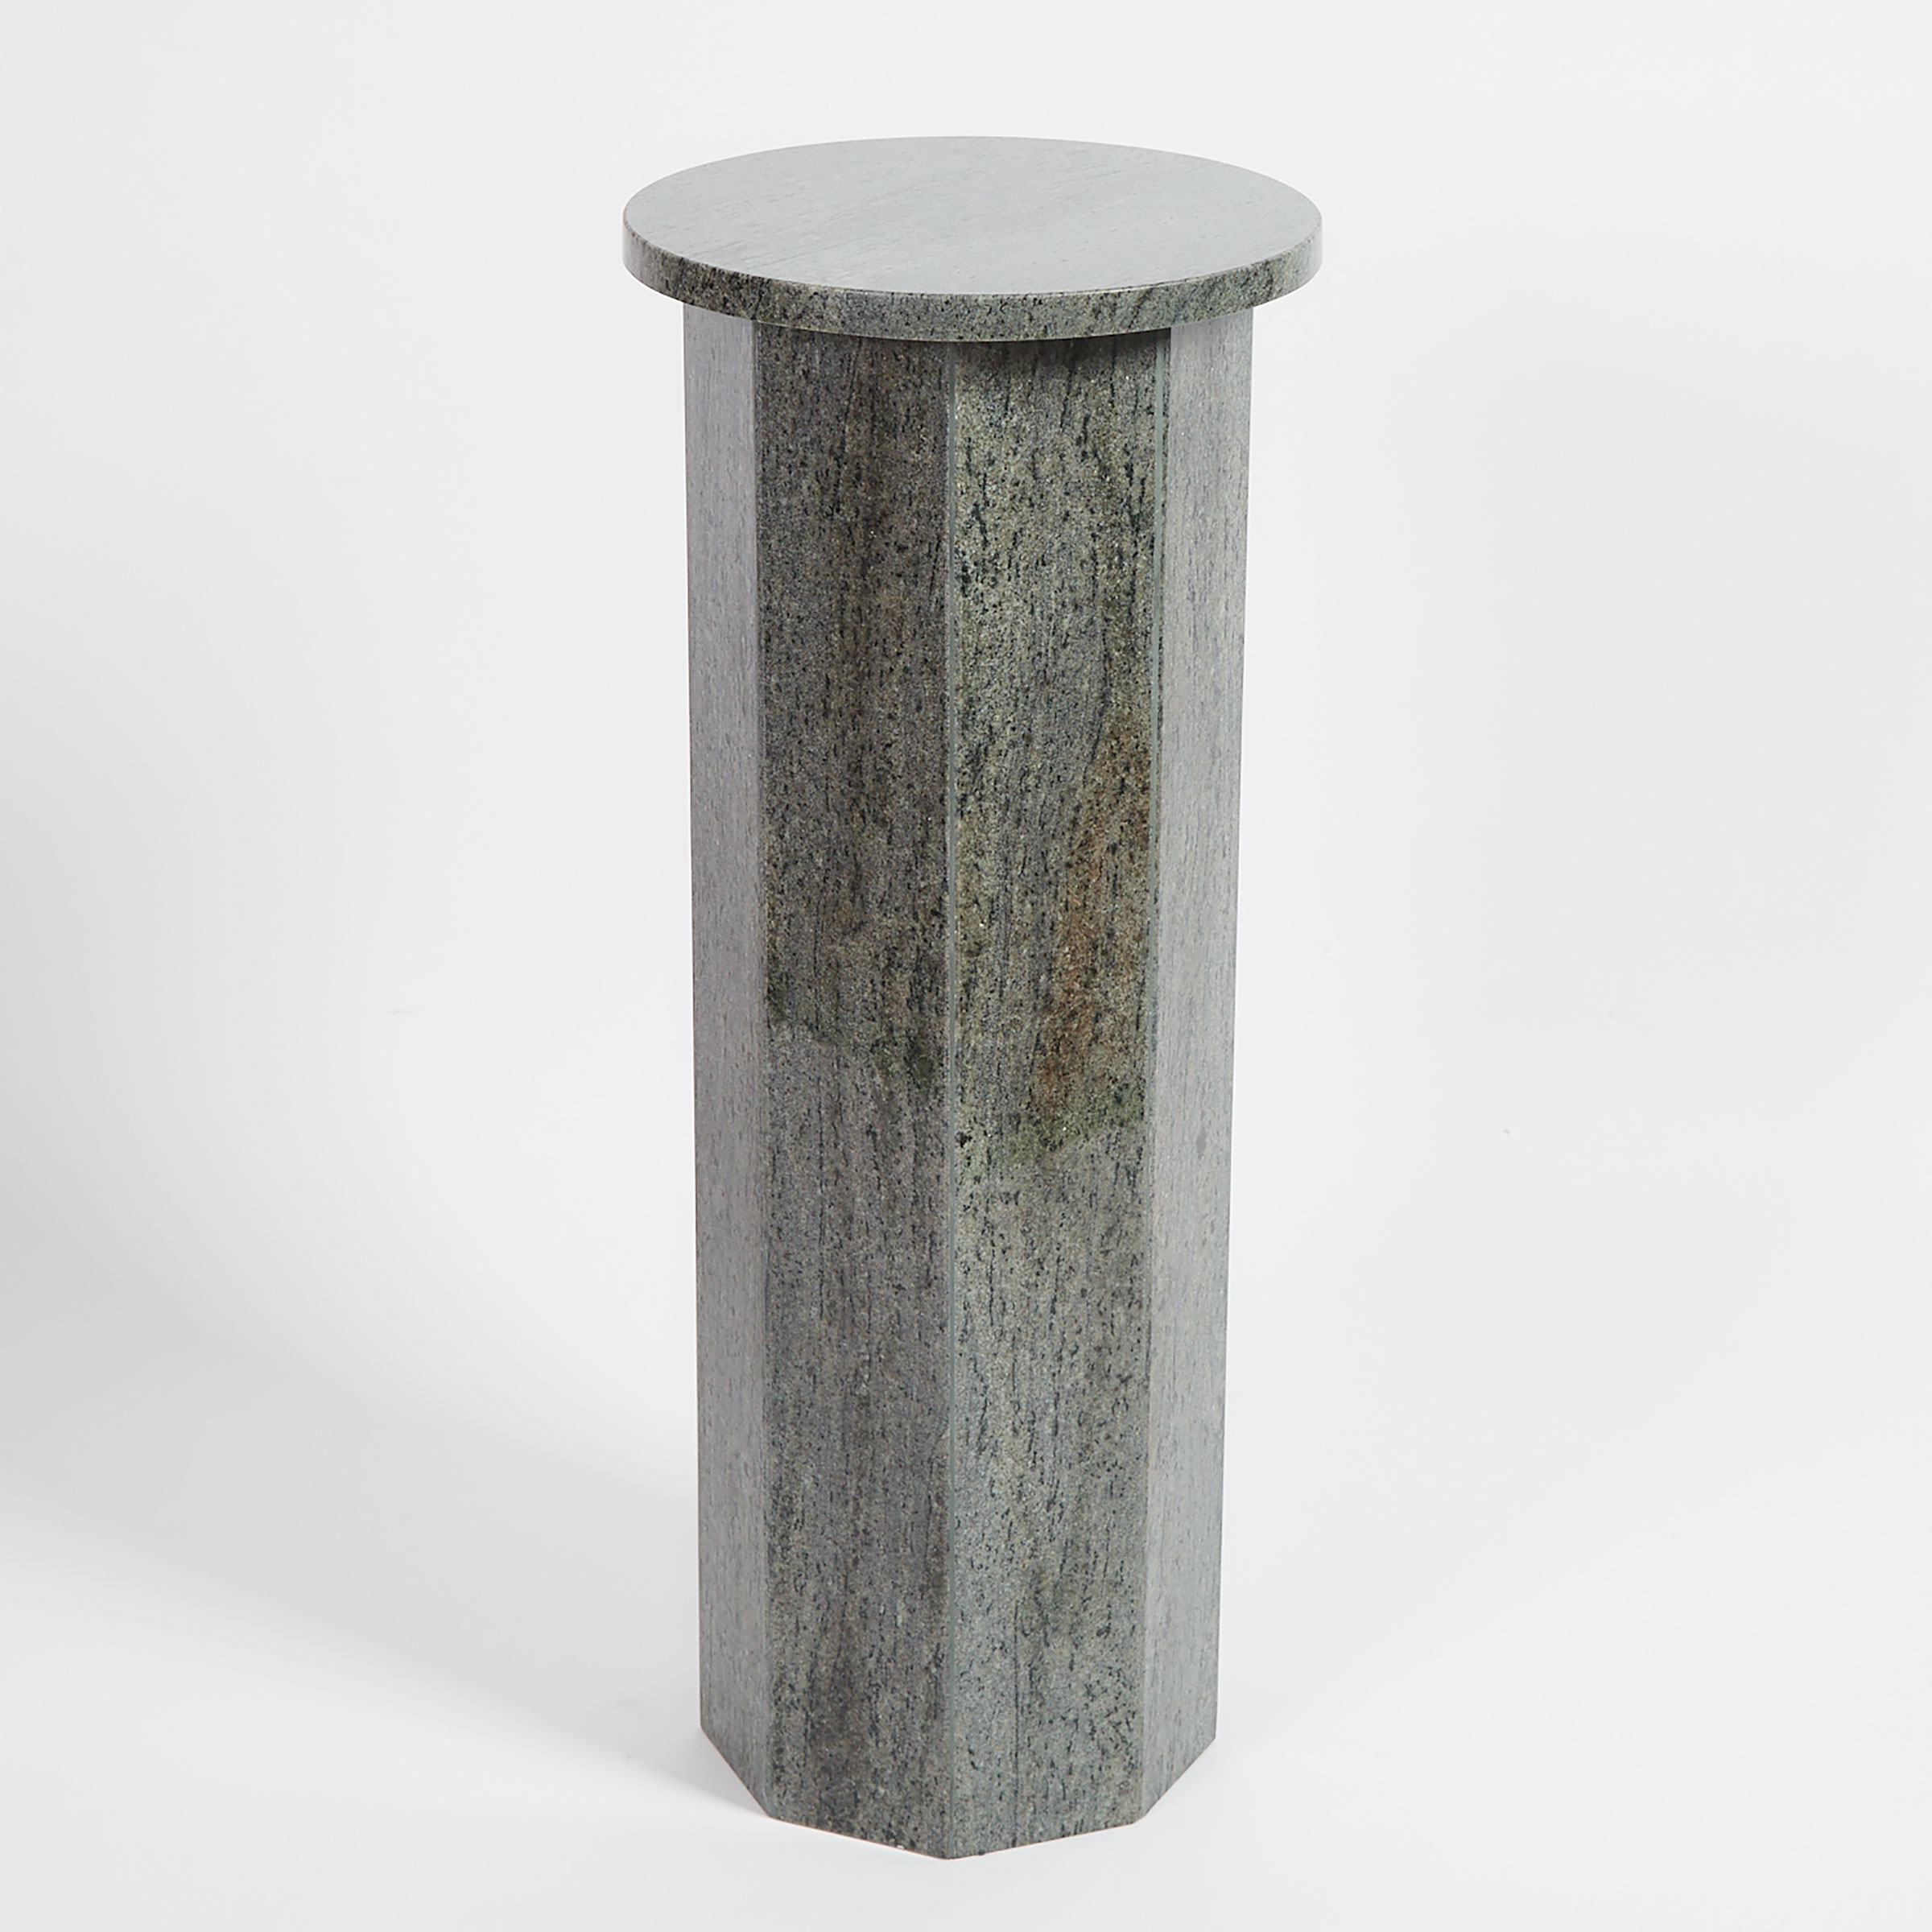 Contemporary Green Granite Column Form Pedestal, late 20th century